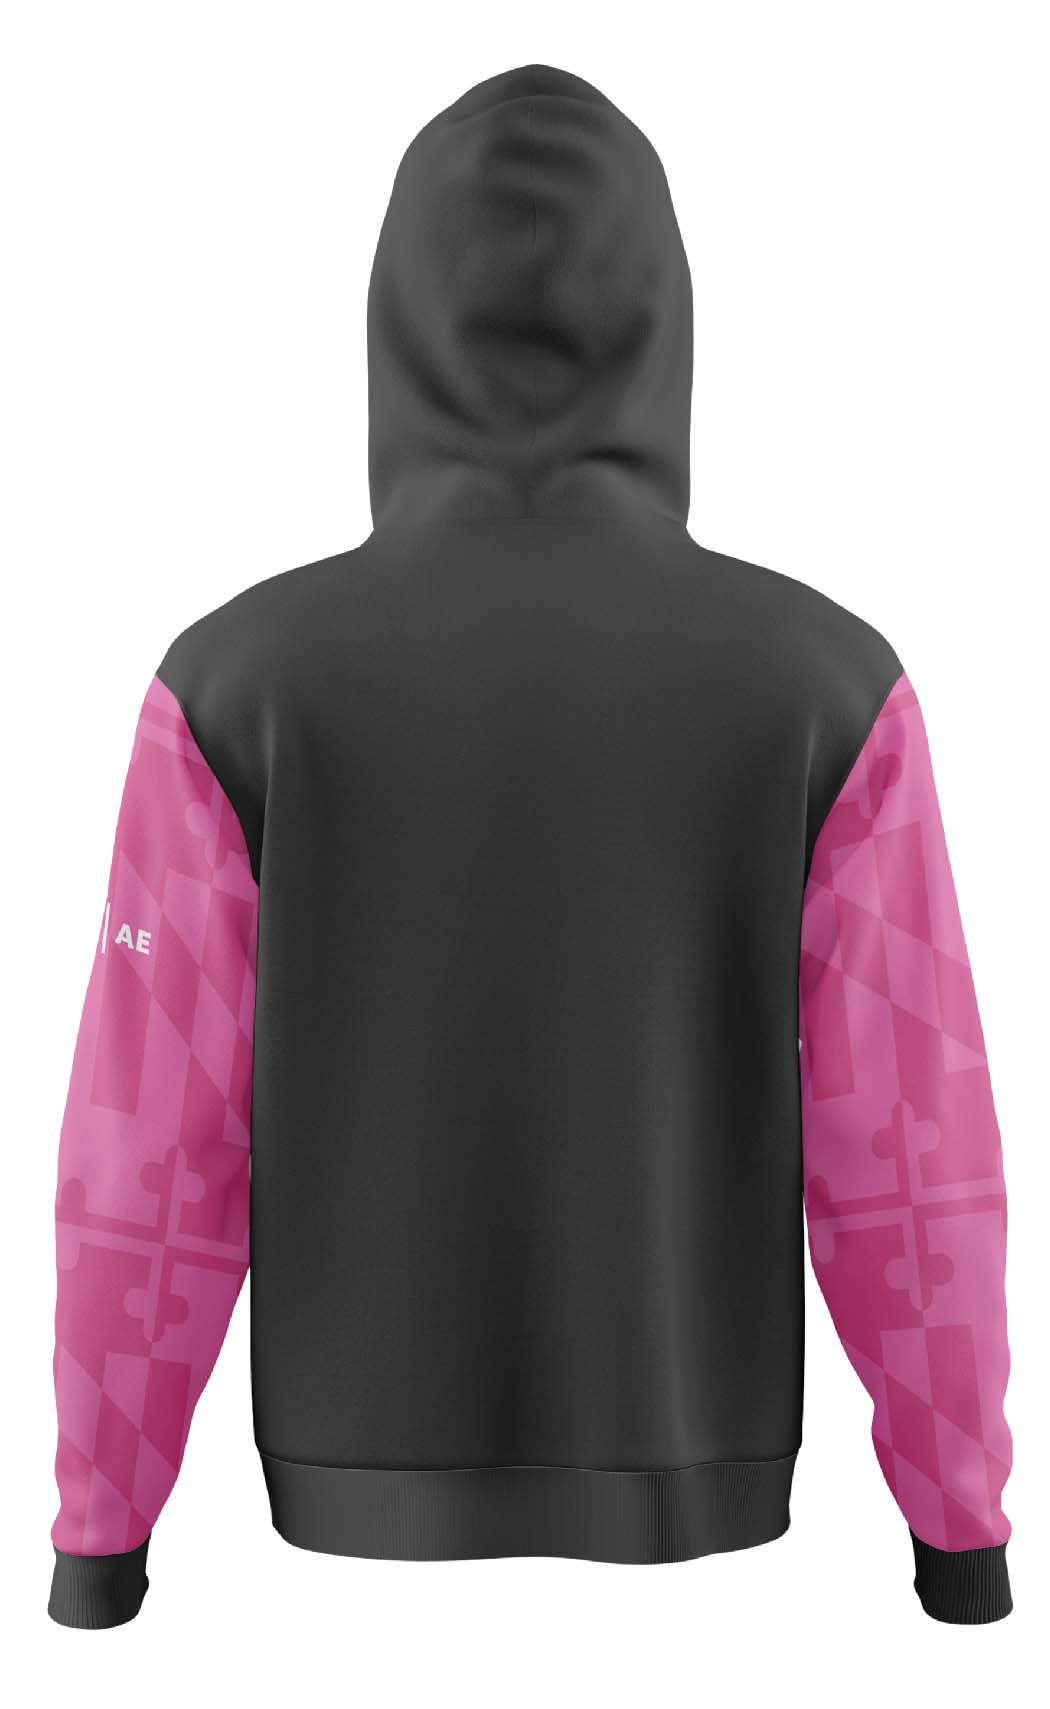 Personalized Black/Pink MD Flag Hoodie